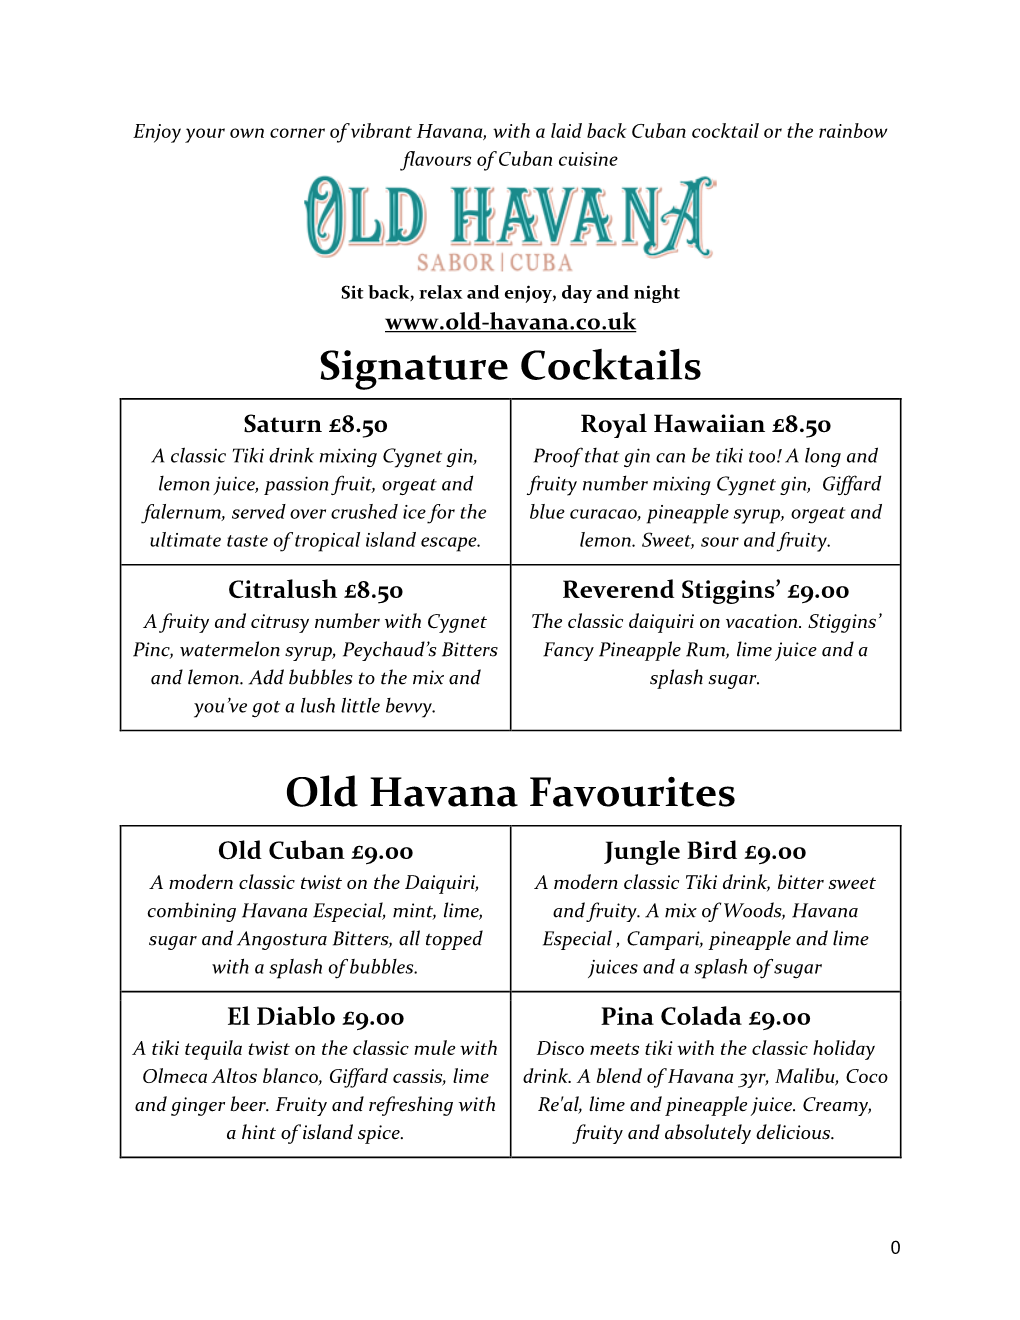 Signature Cocktails Old Havana Favourites